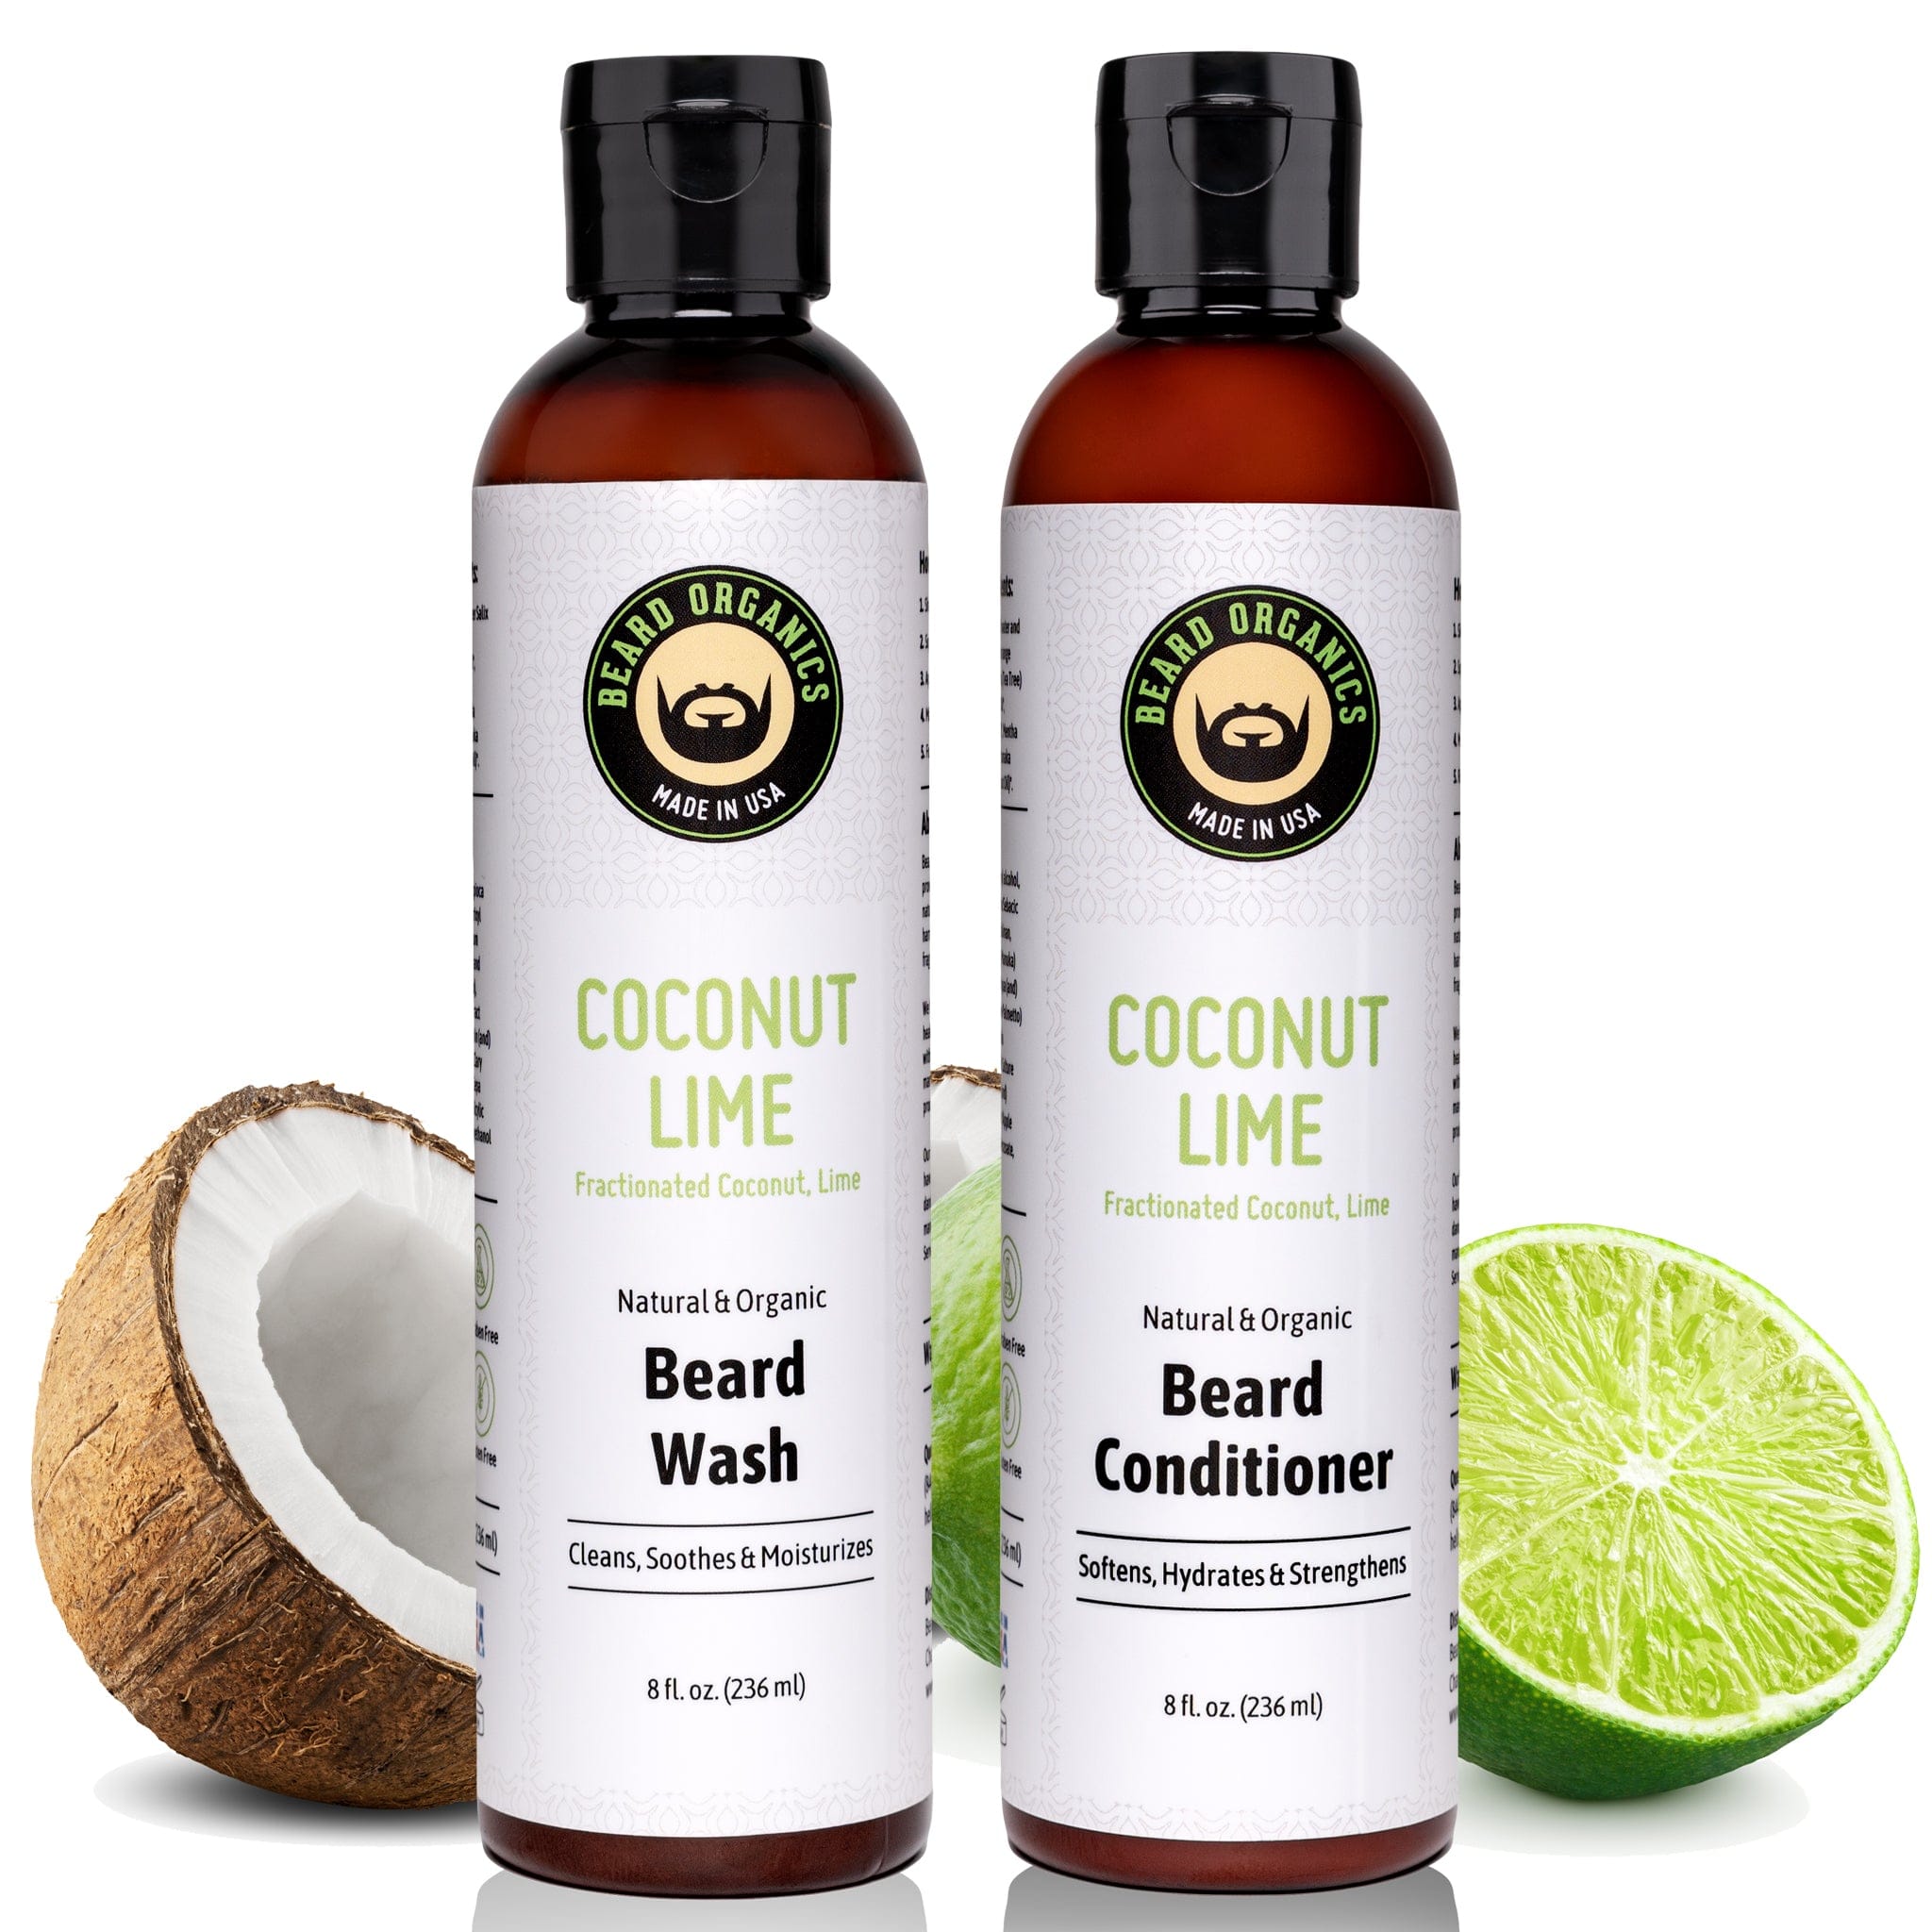 Beard Wash and Conditioner by Beard Organics